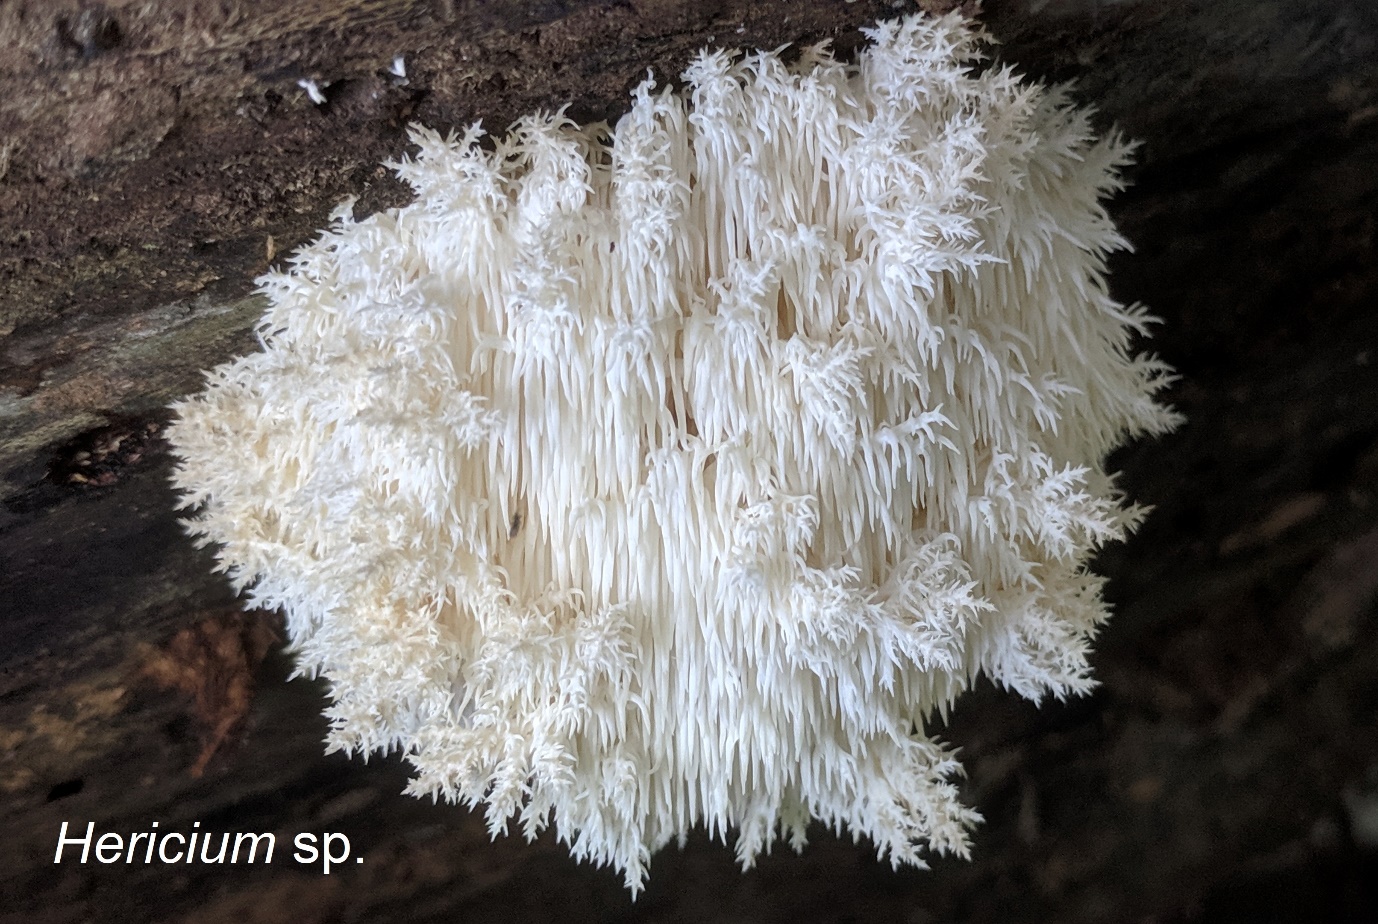 Queensland mycological society fungi